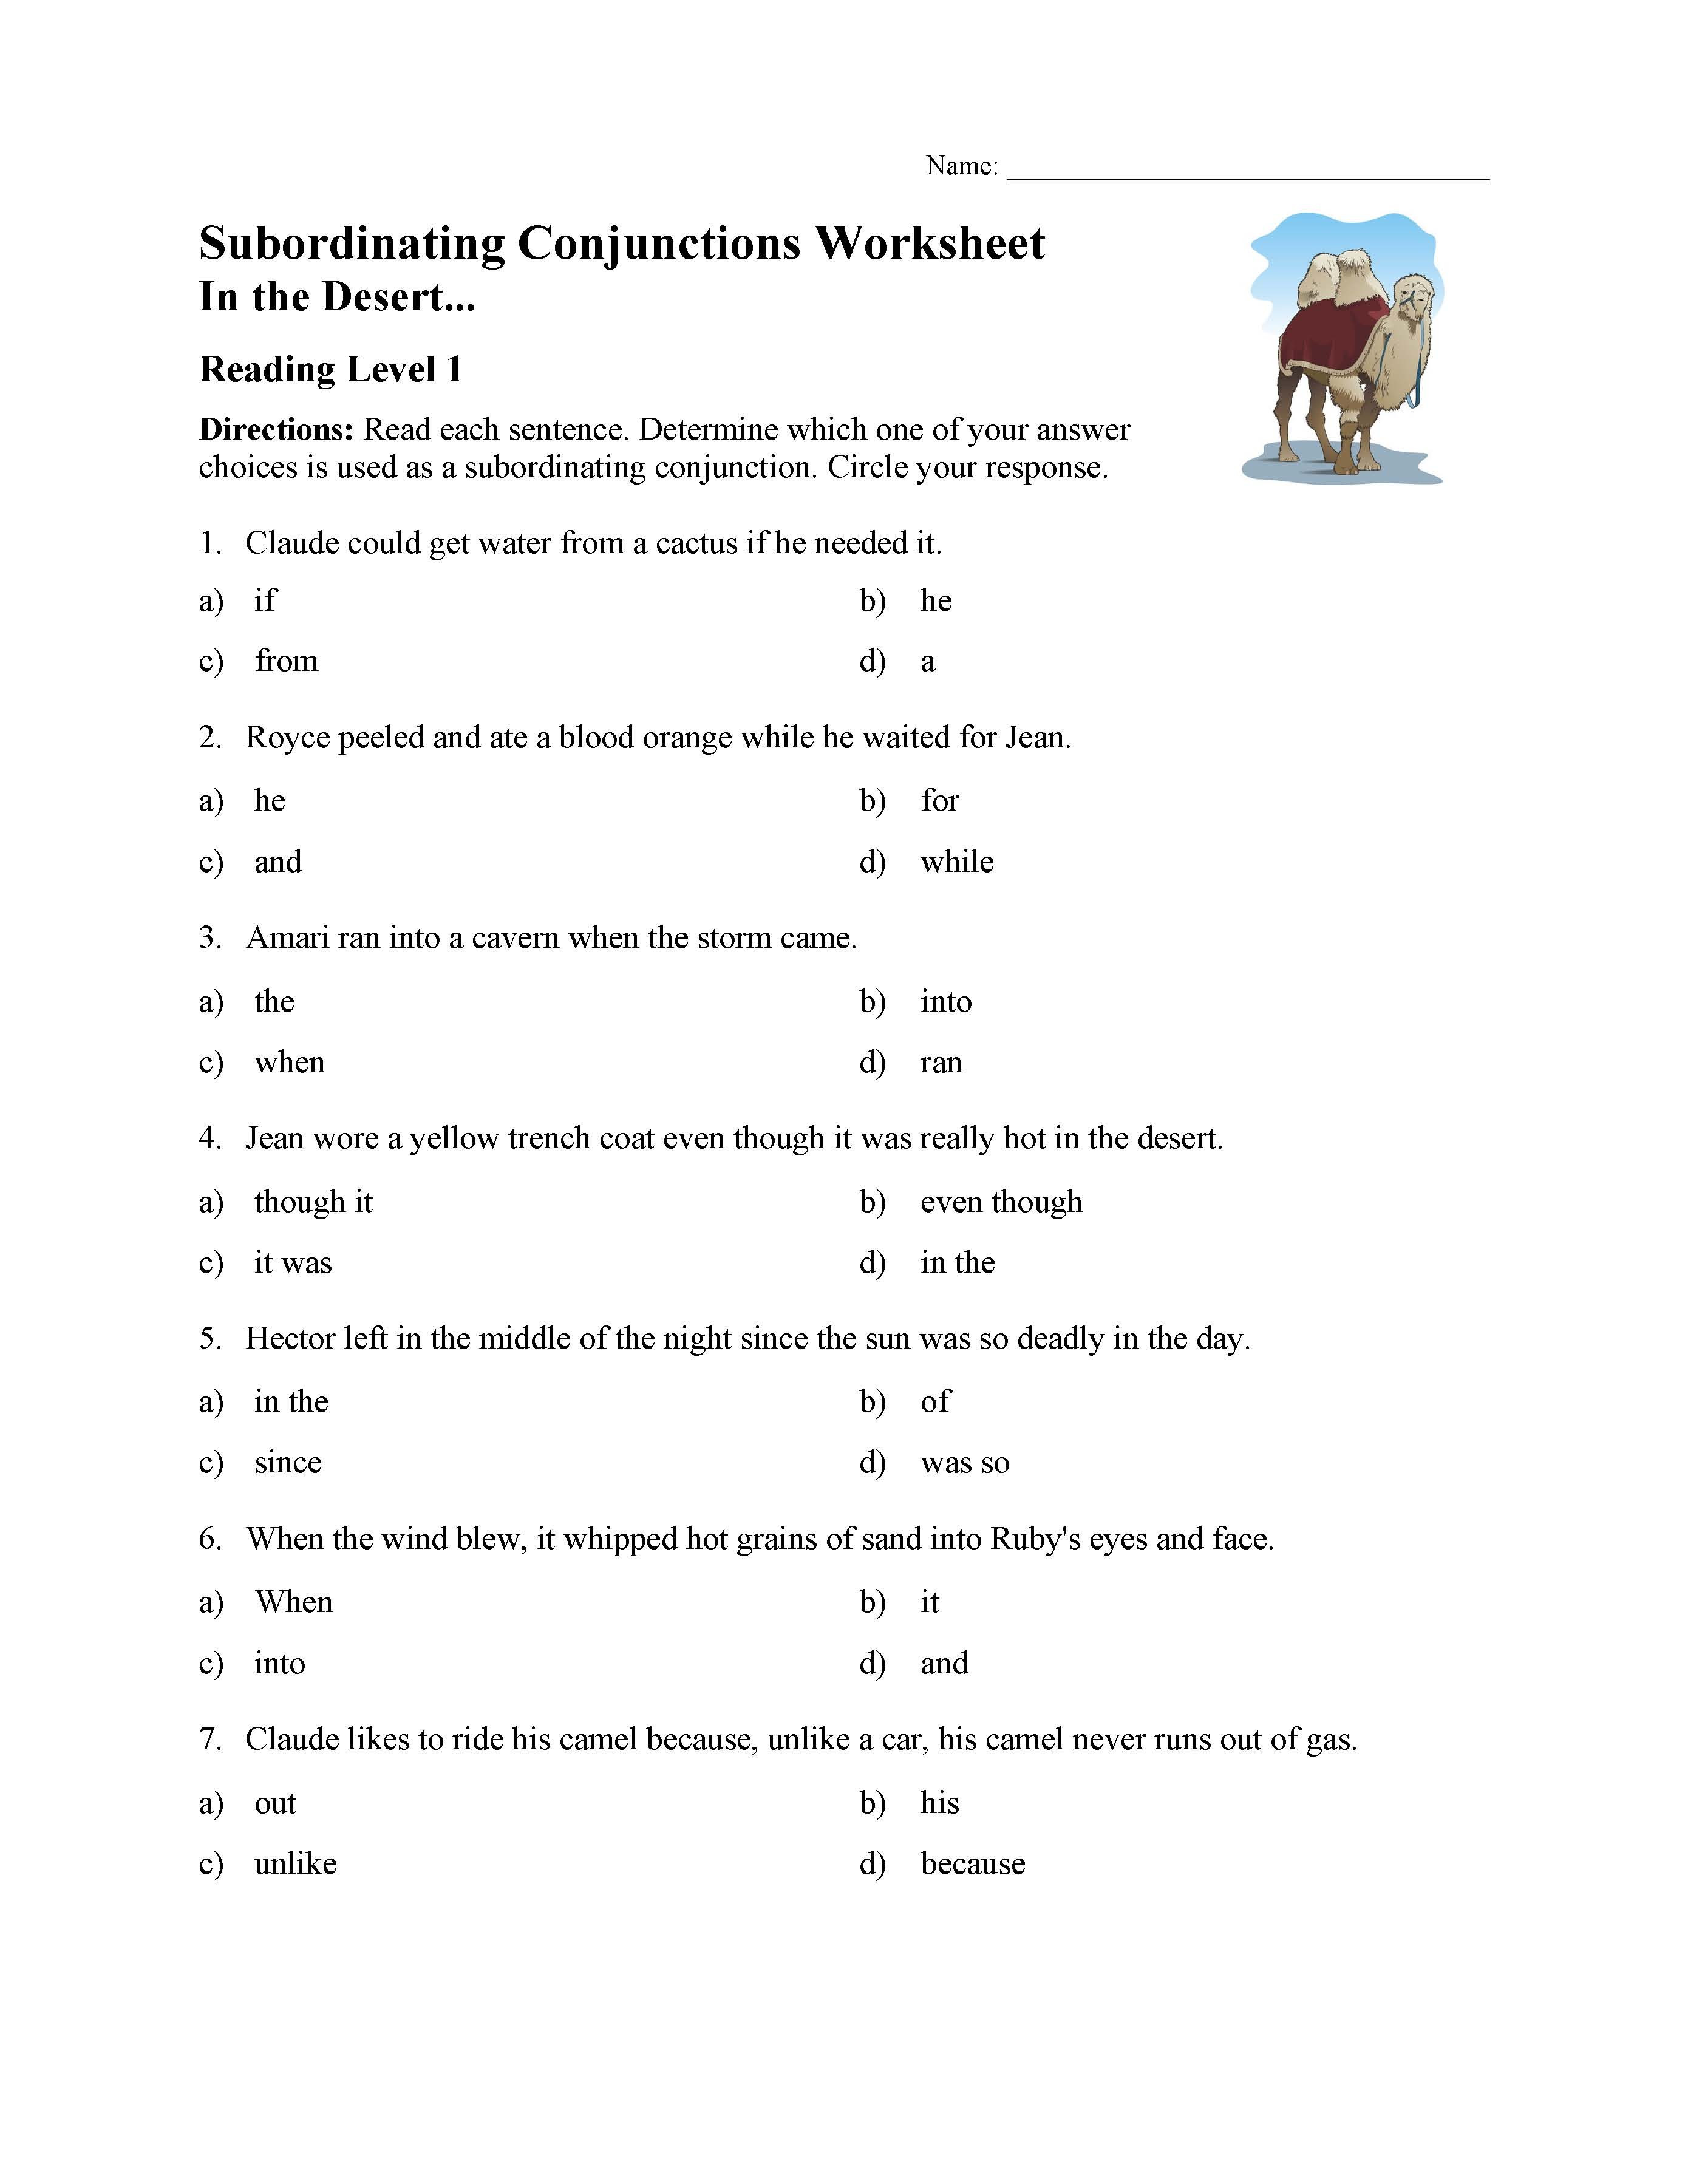 Conjunctions Worksheets 5th Grade Subordinating Conjunctions Worksheet Reading Level 1